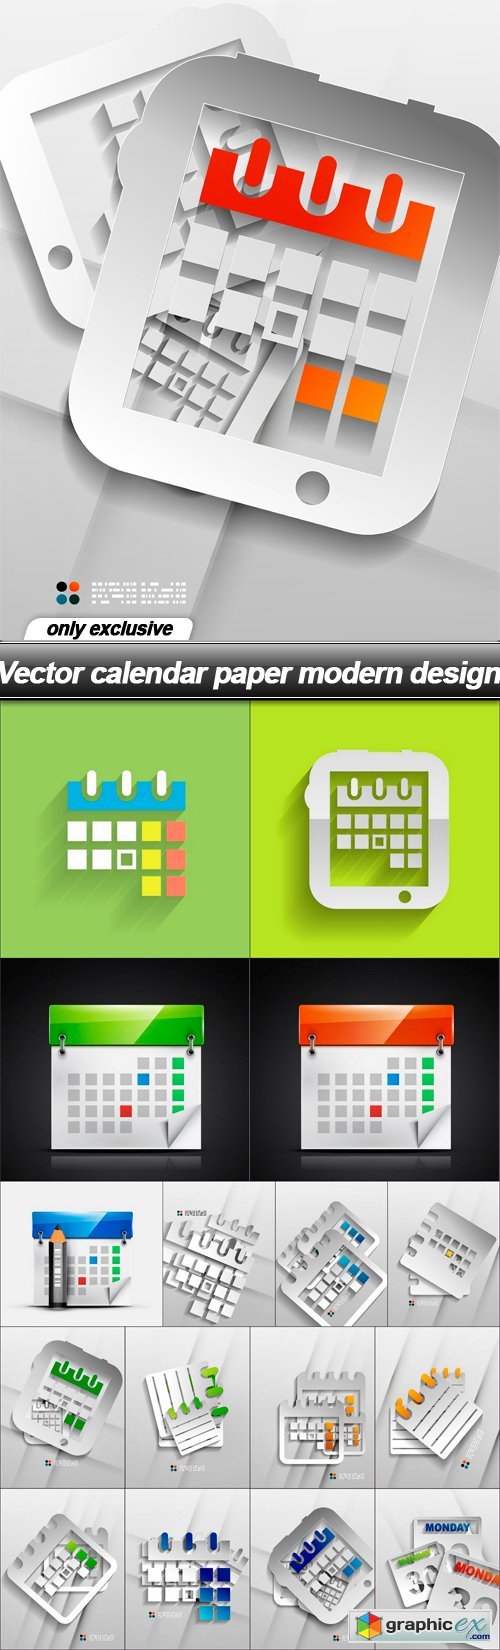 calendar paper modern design - 17 EPS